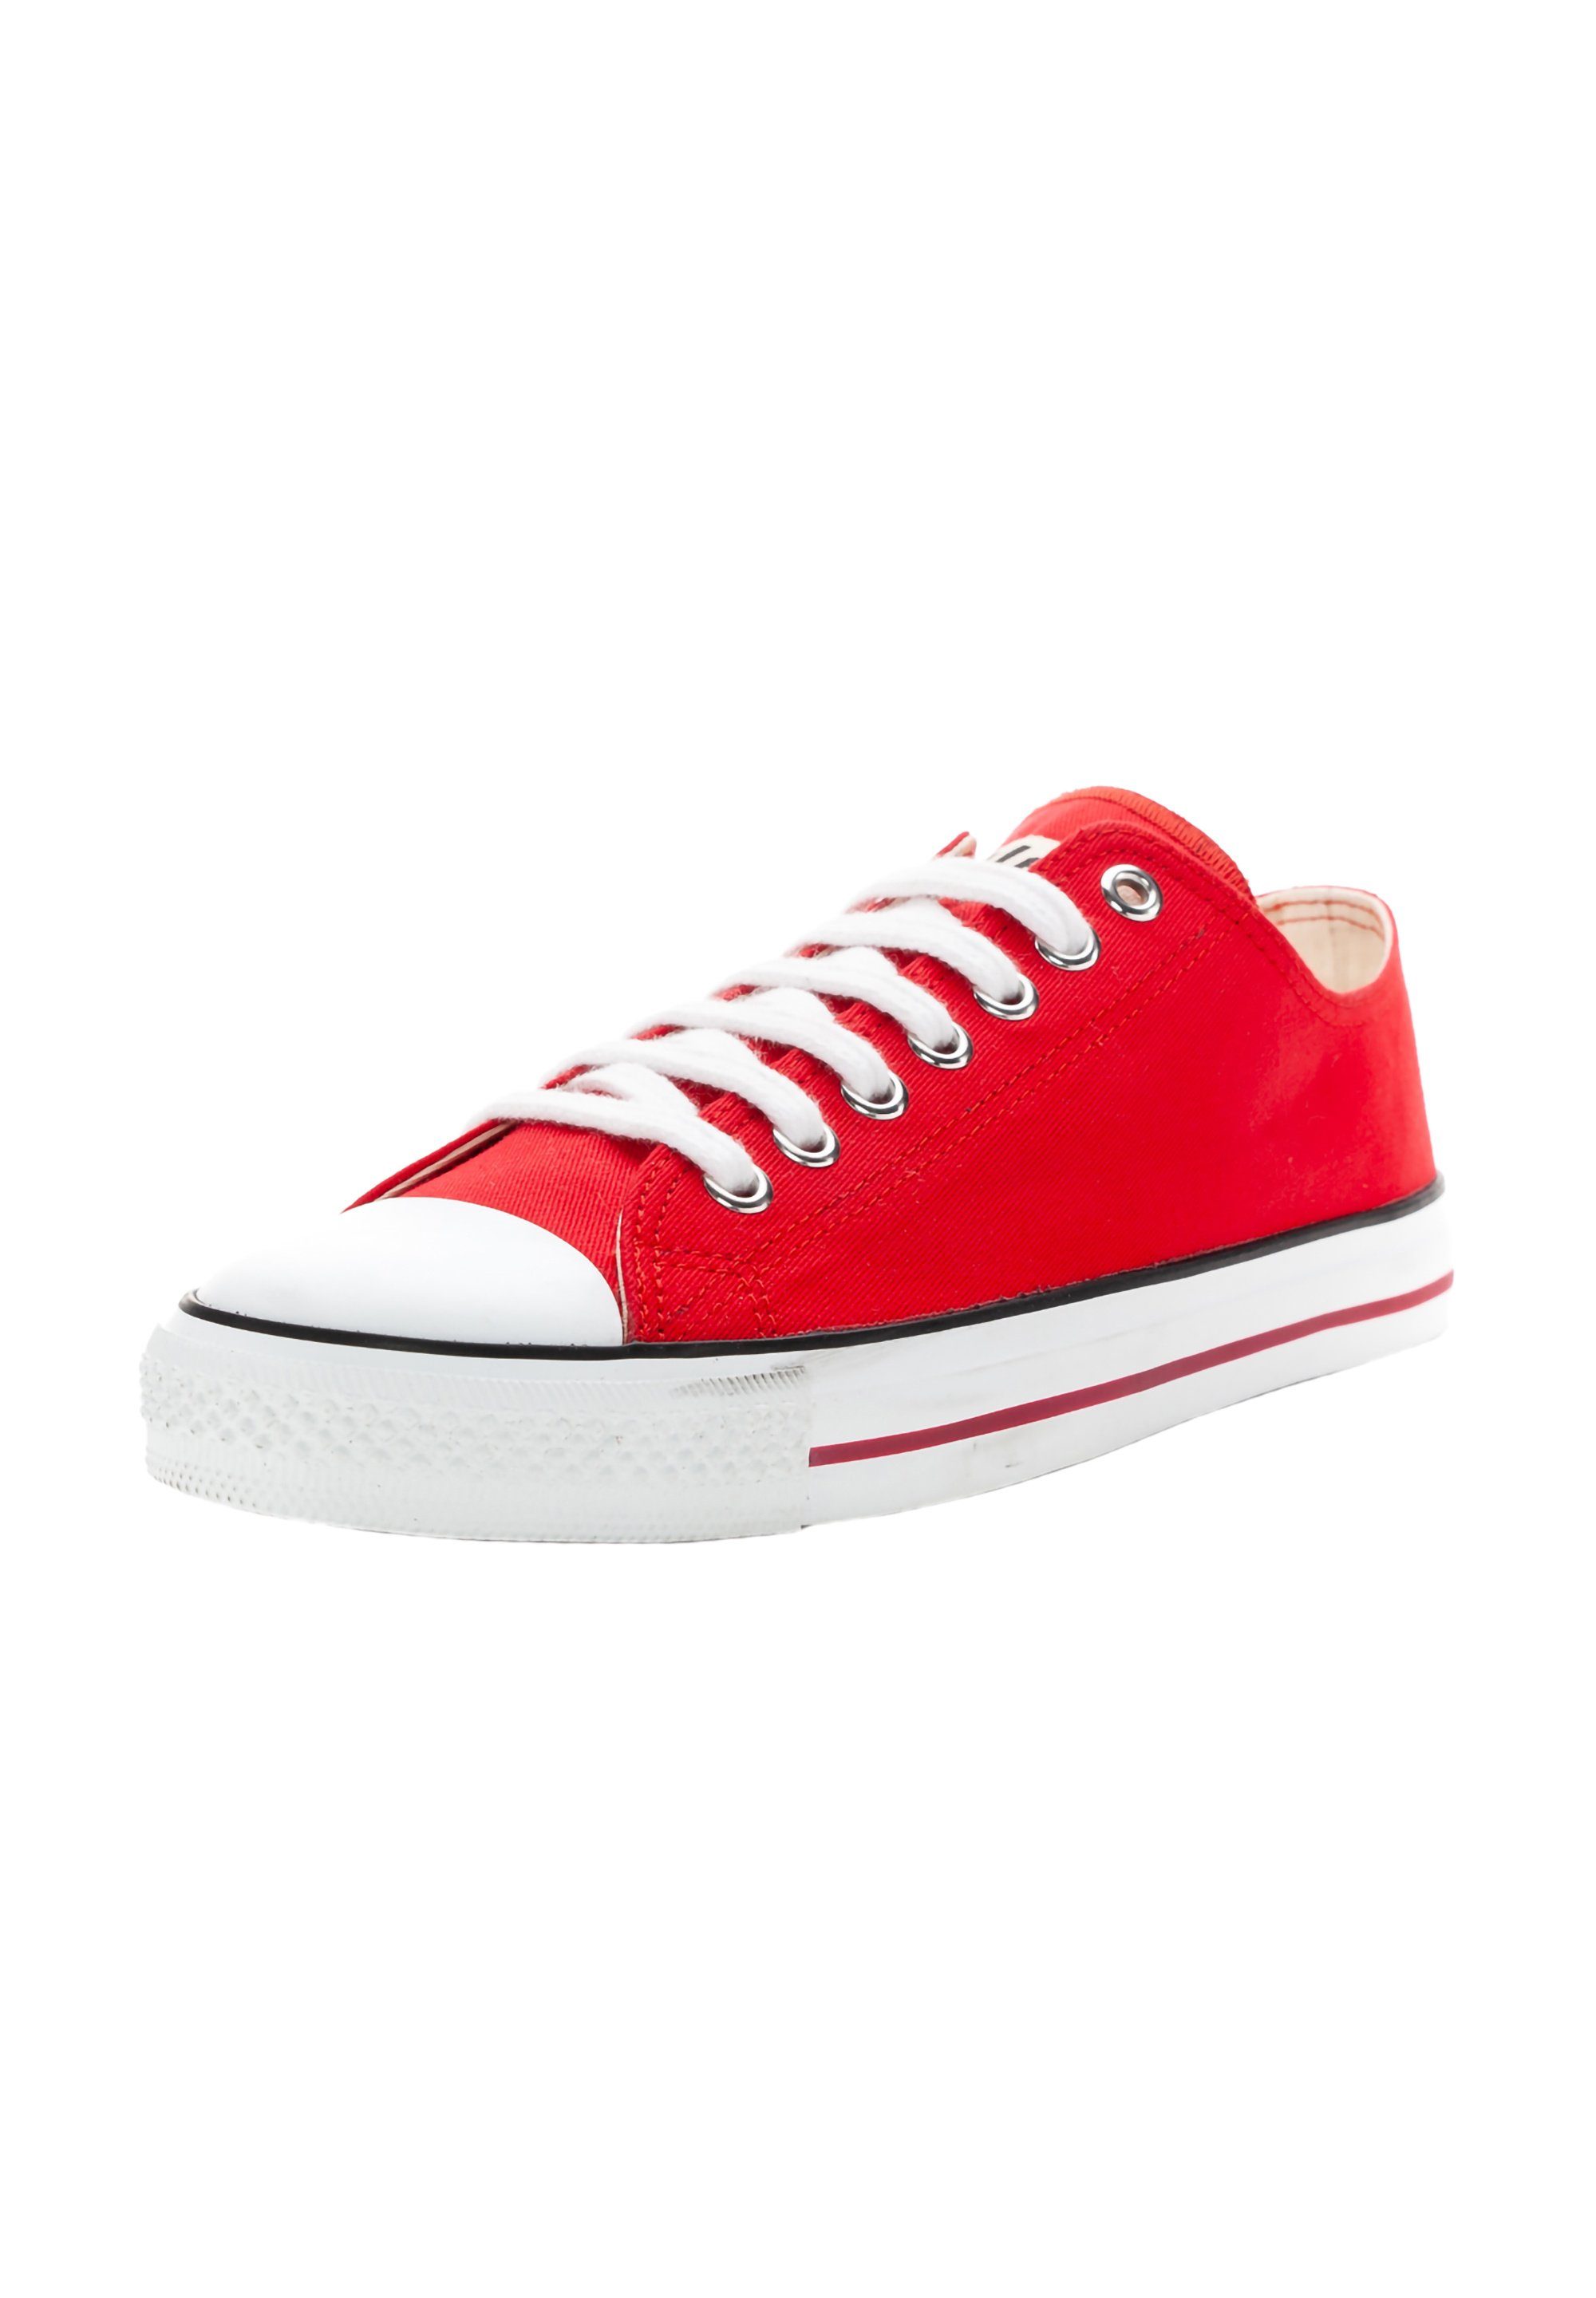 ETHLETIC Fair Trainer White Cap Lo Cut Sneaker Fair, Vegan, Nachhaltig cranberry red just white